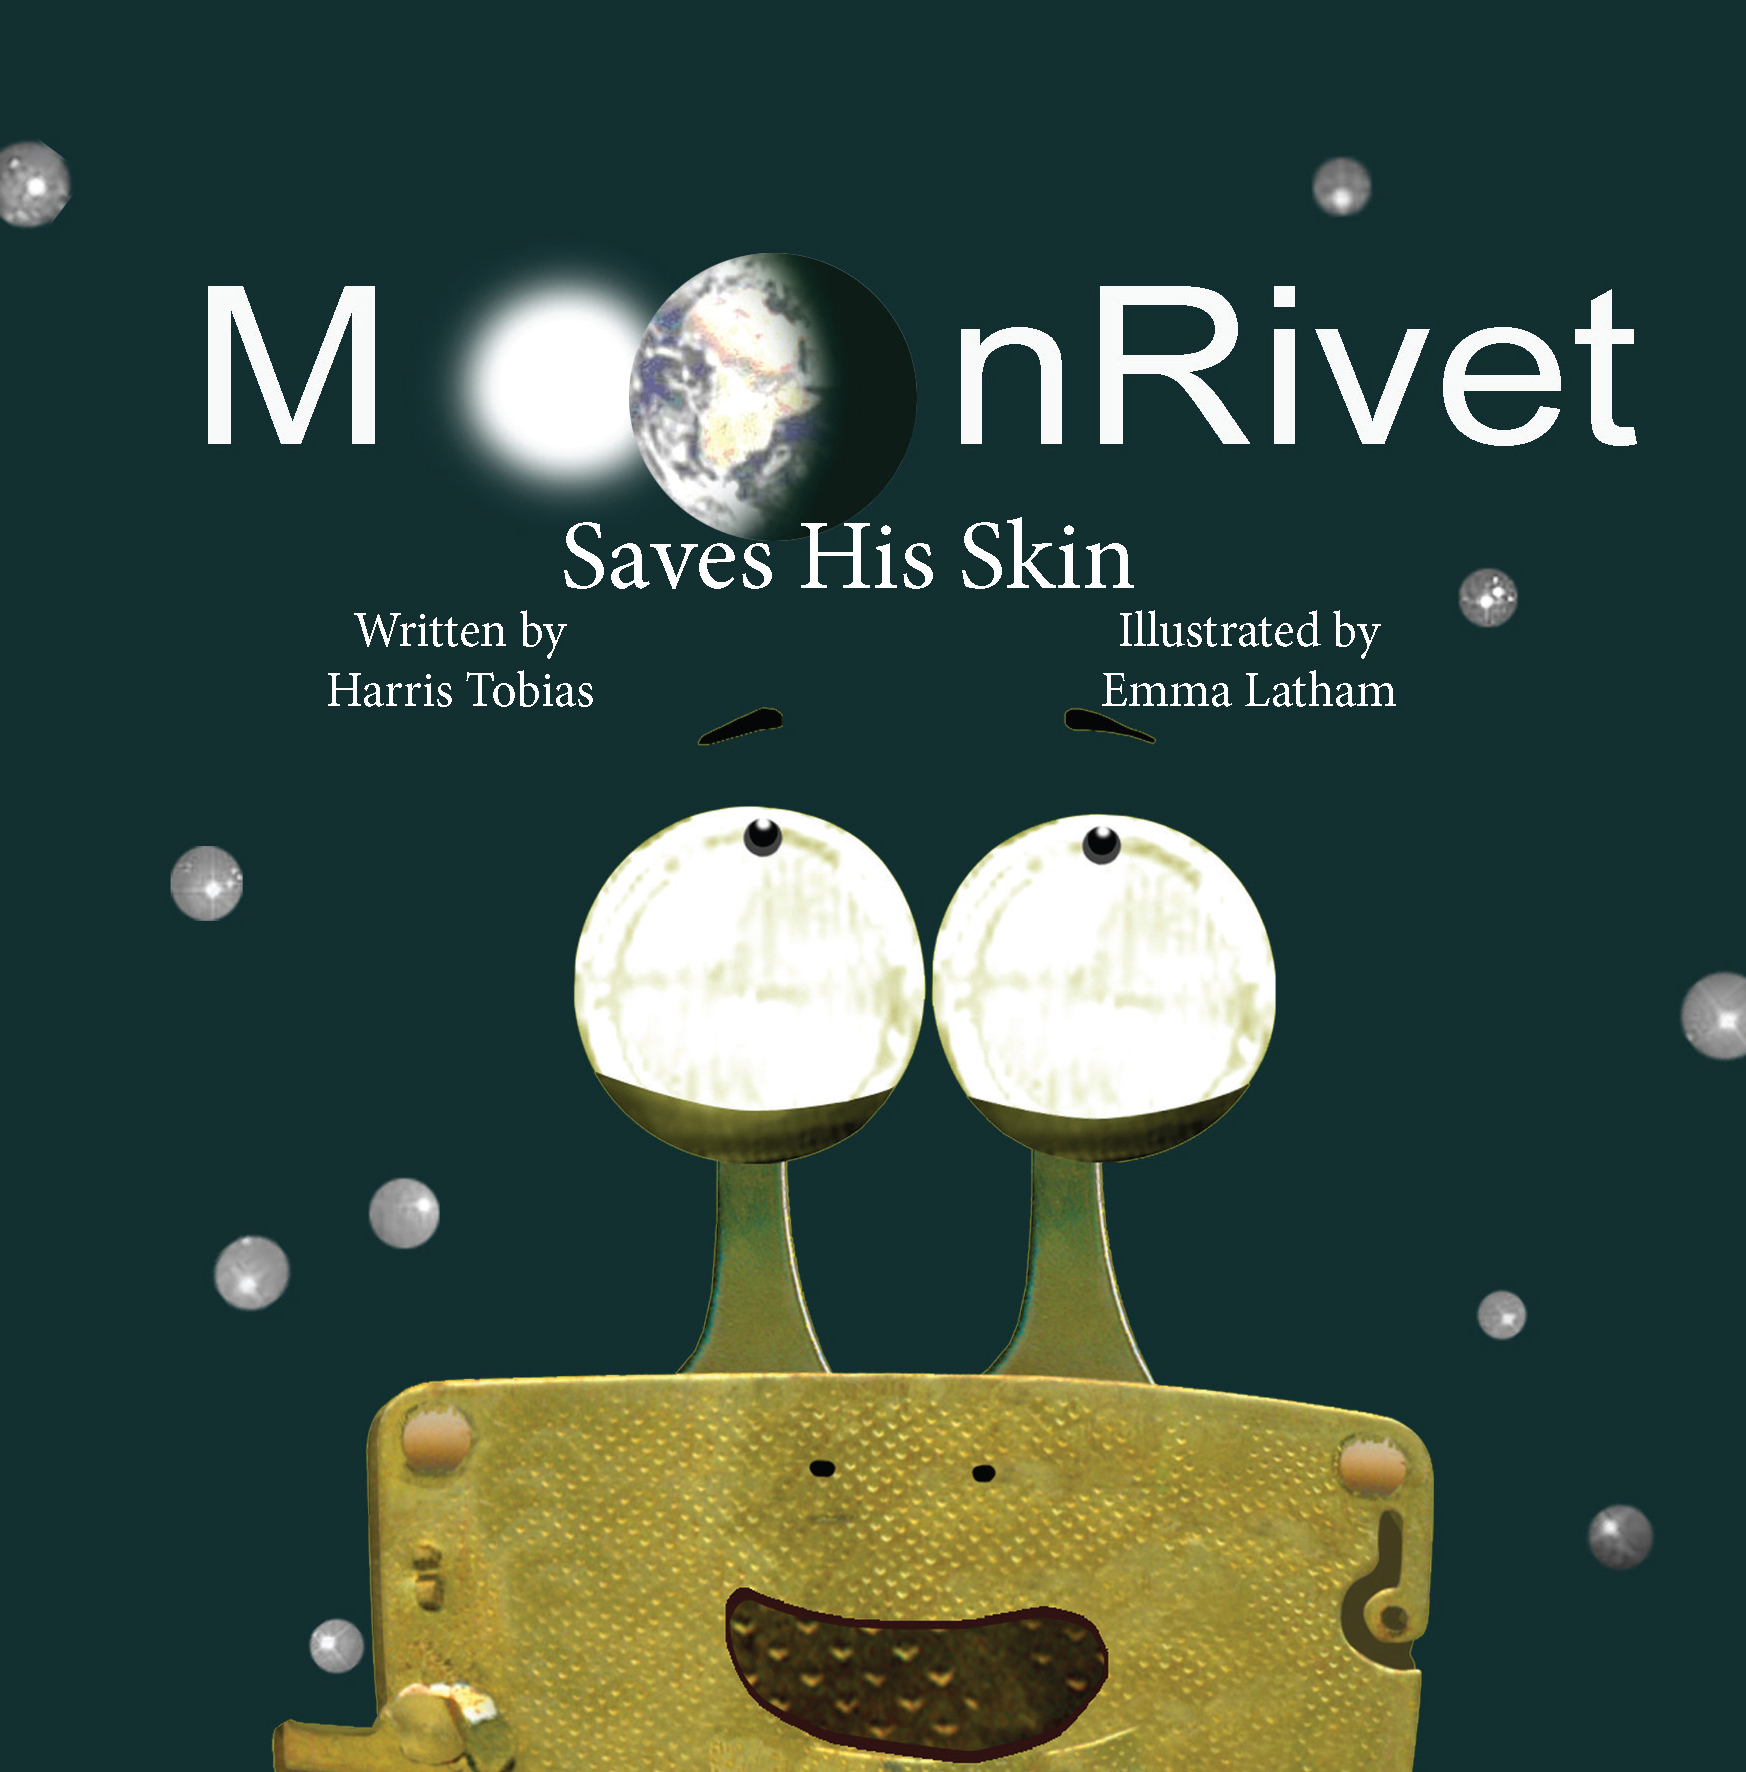 MoonRivet Saves His Skin